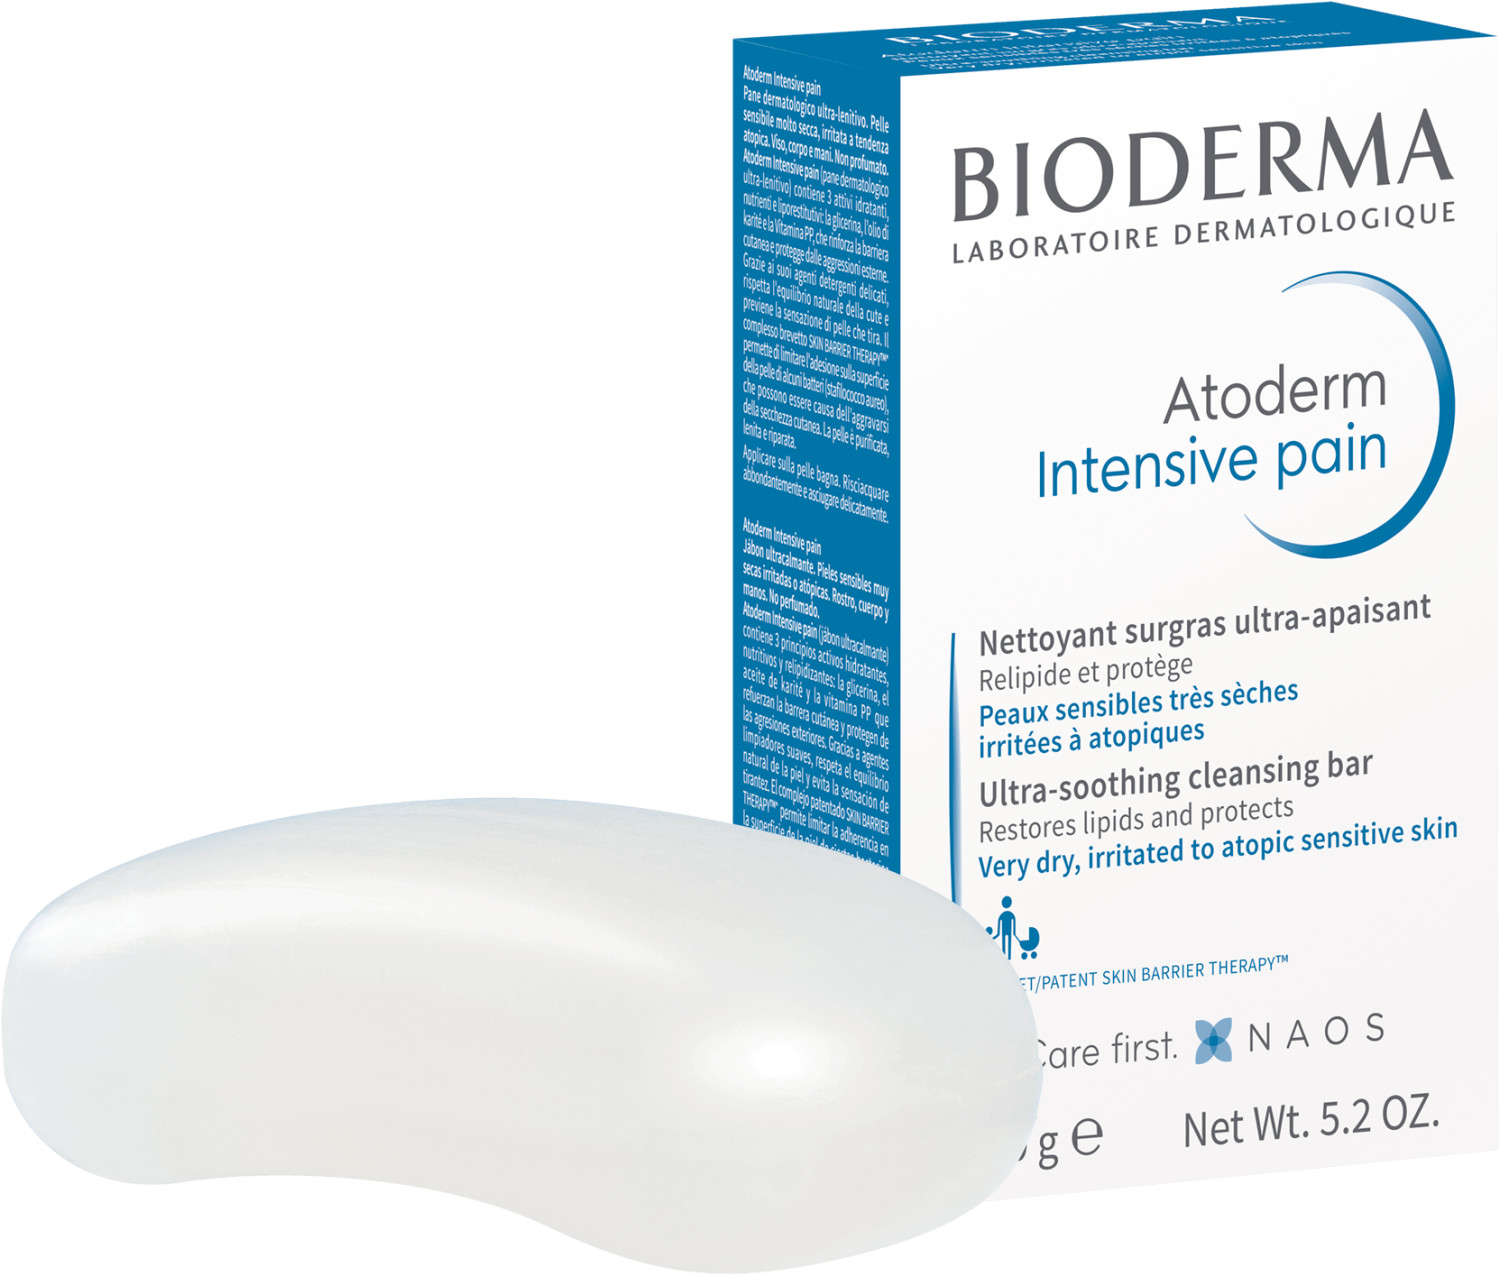 Photos - Shower Gel Bioderma Atoderm Intensive Pain Cleansing Ultra-rich Soap 150g 